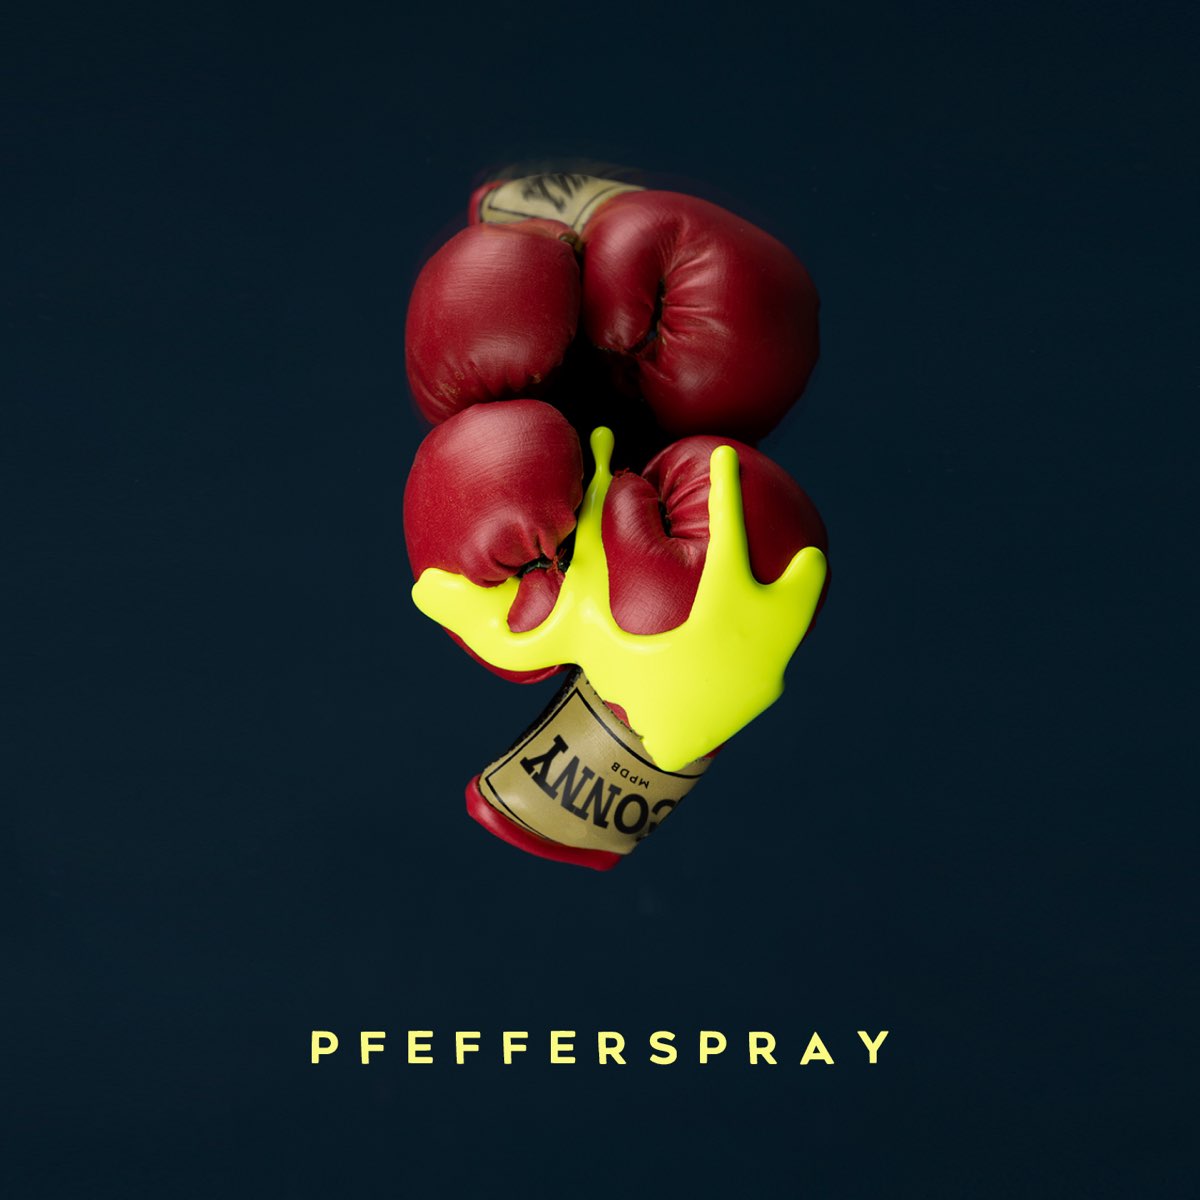 Pfefferspray (feat. Liser) - Single - Album by CONNY - Apple Music